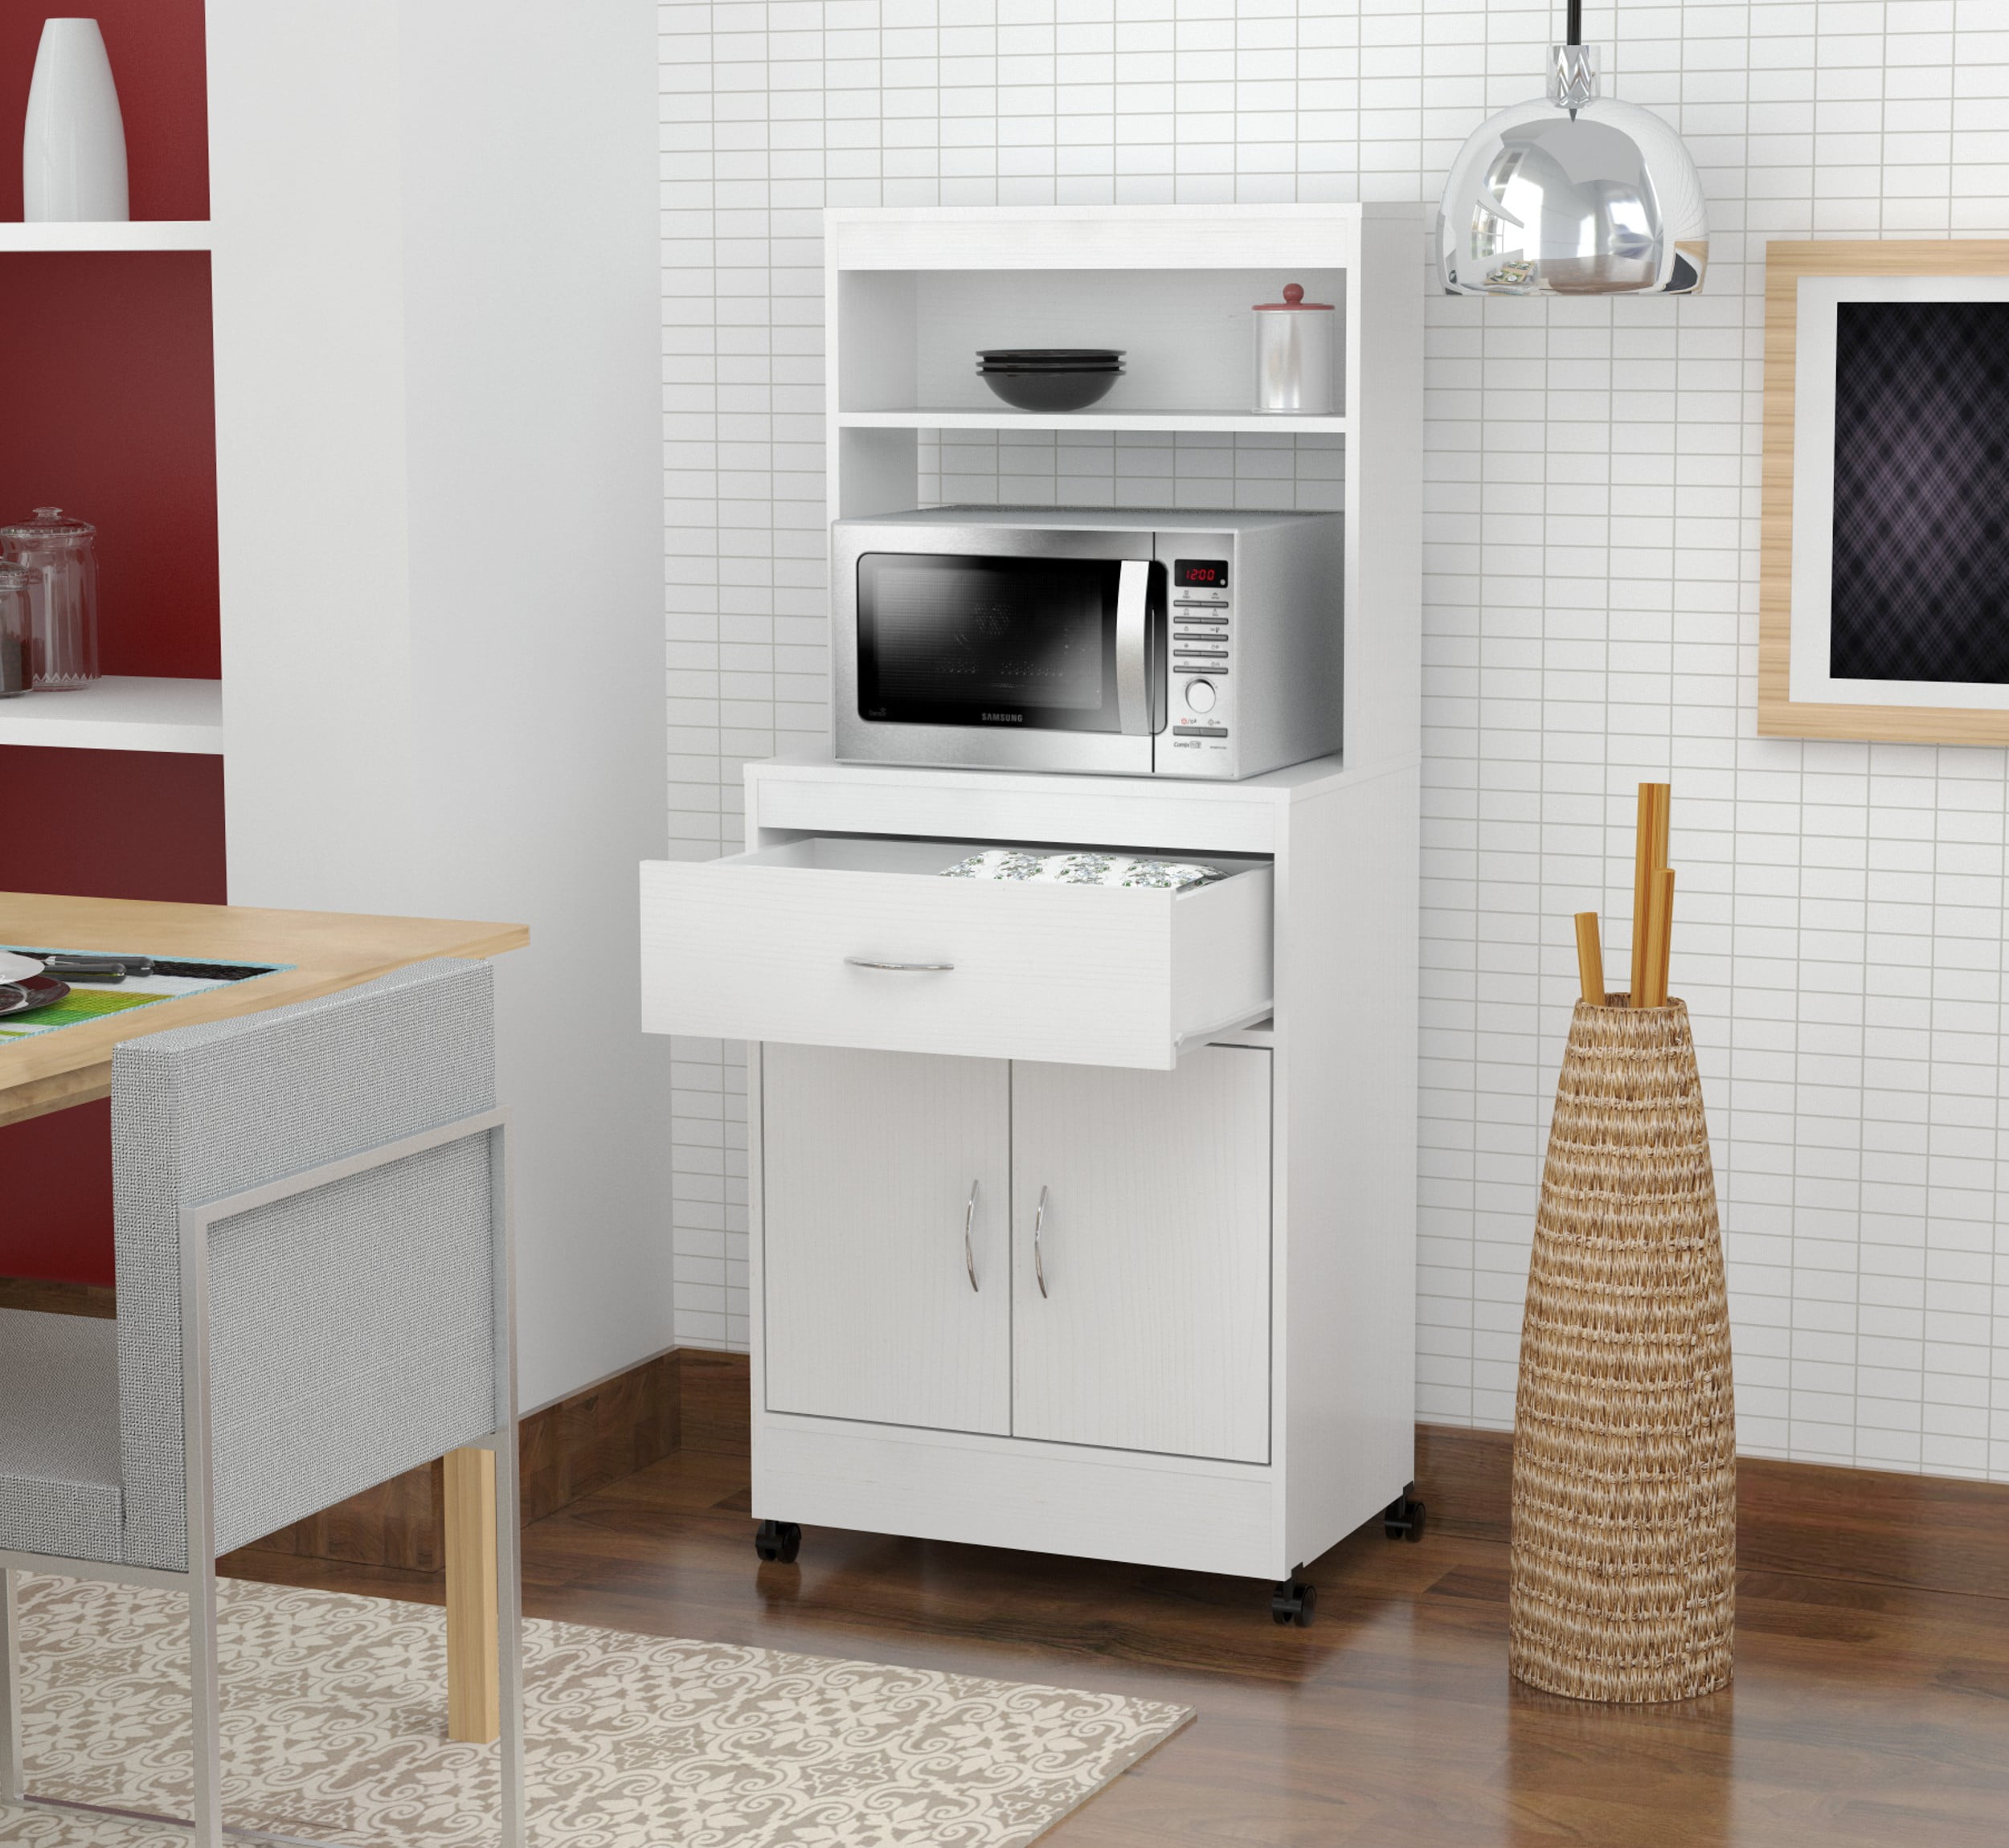 Inval 3-Shelf Mini Refrigerator Microwave Storage Cabinet, Amaretto